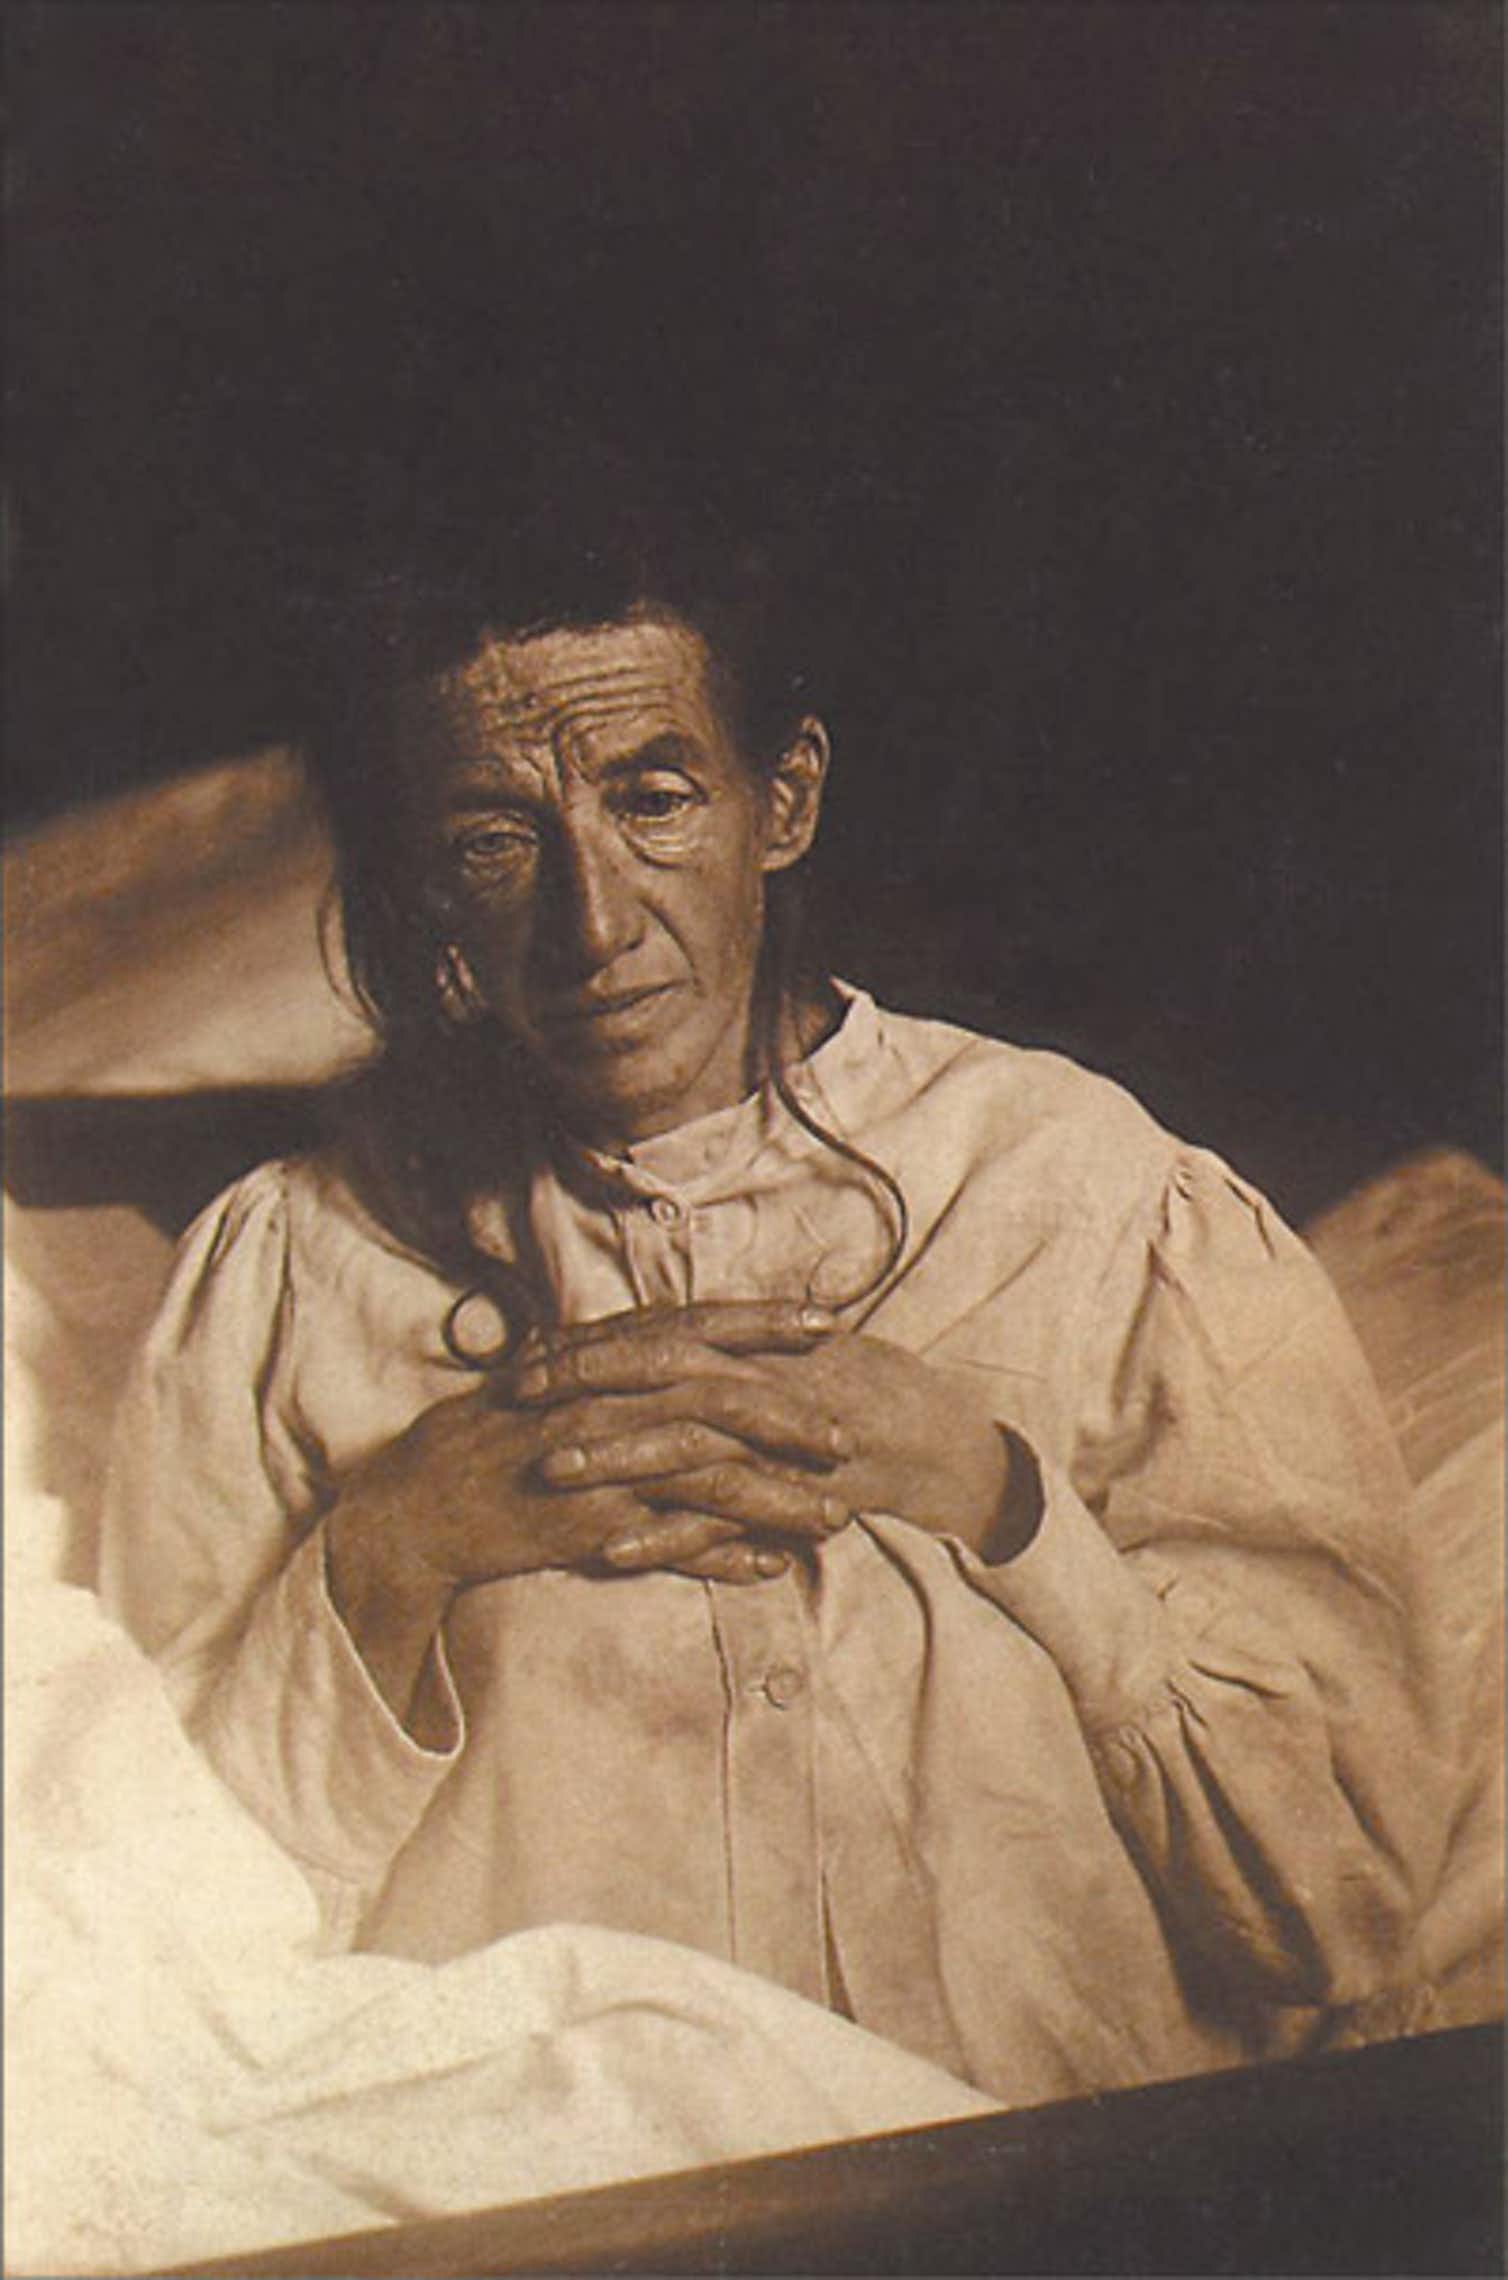 Auguste Deter, Alois Alzheimer's patient in November 1901, first described patient with Alzheimer's Disease. 